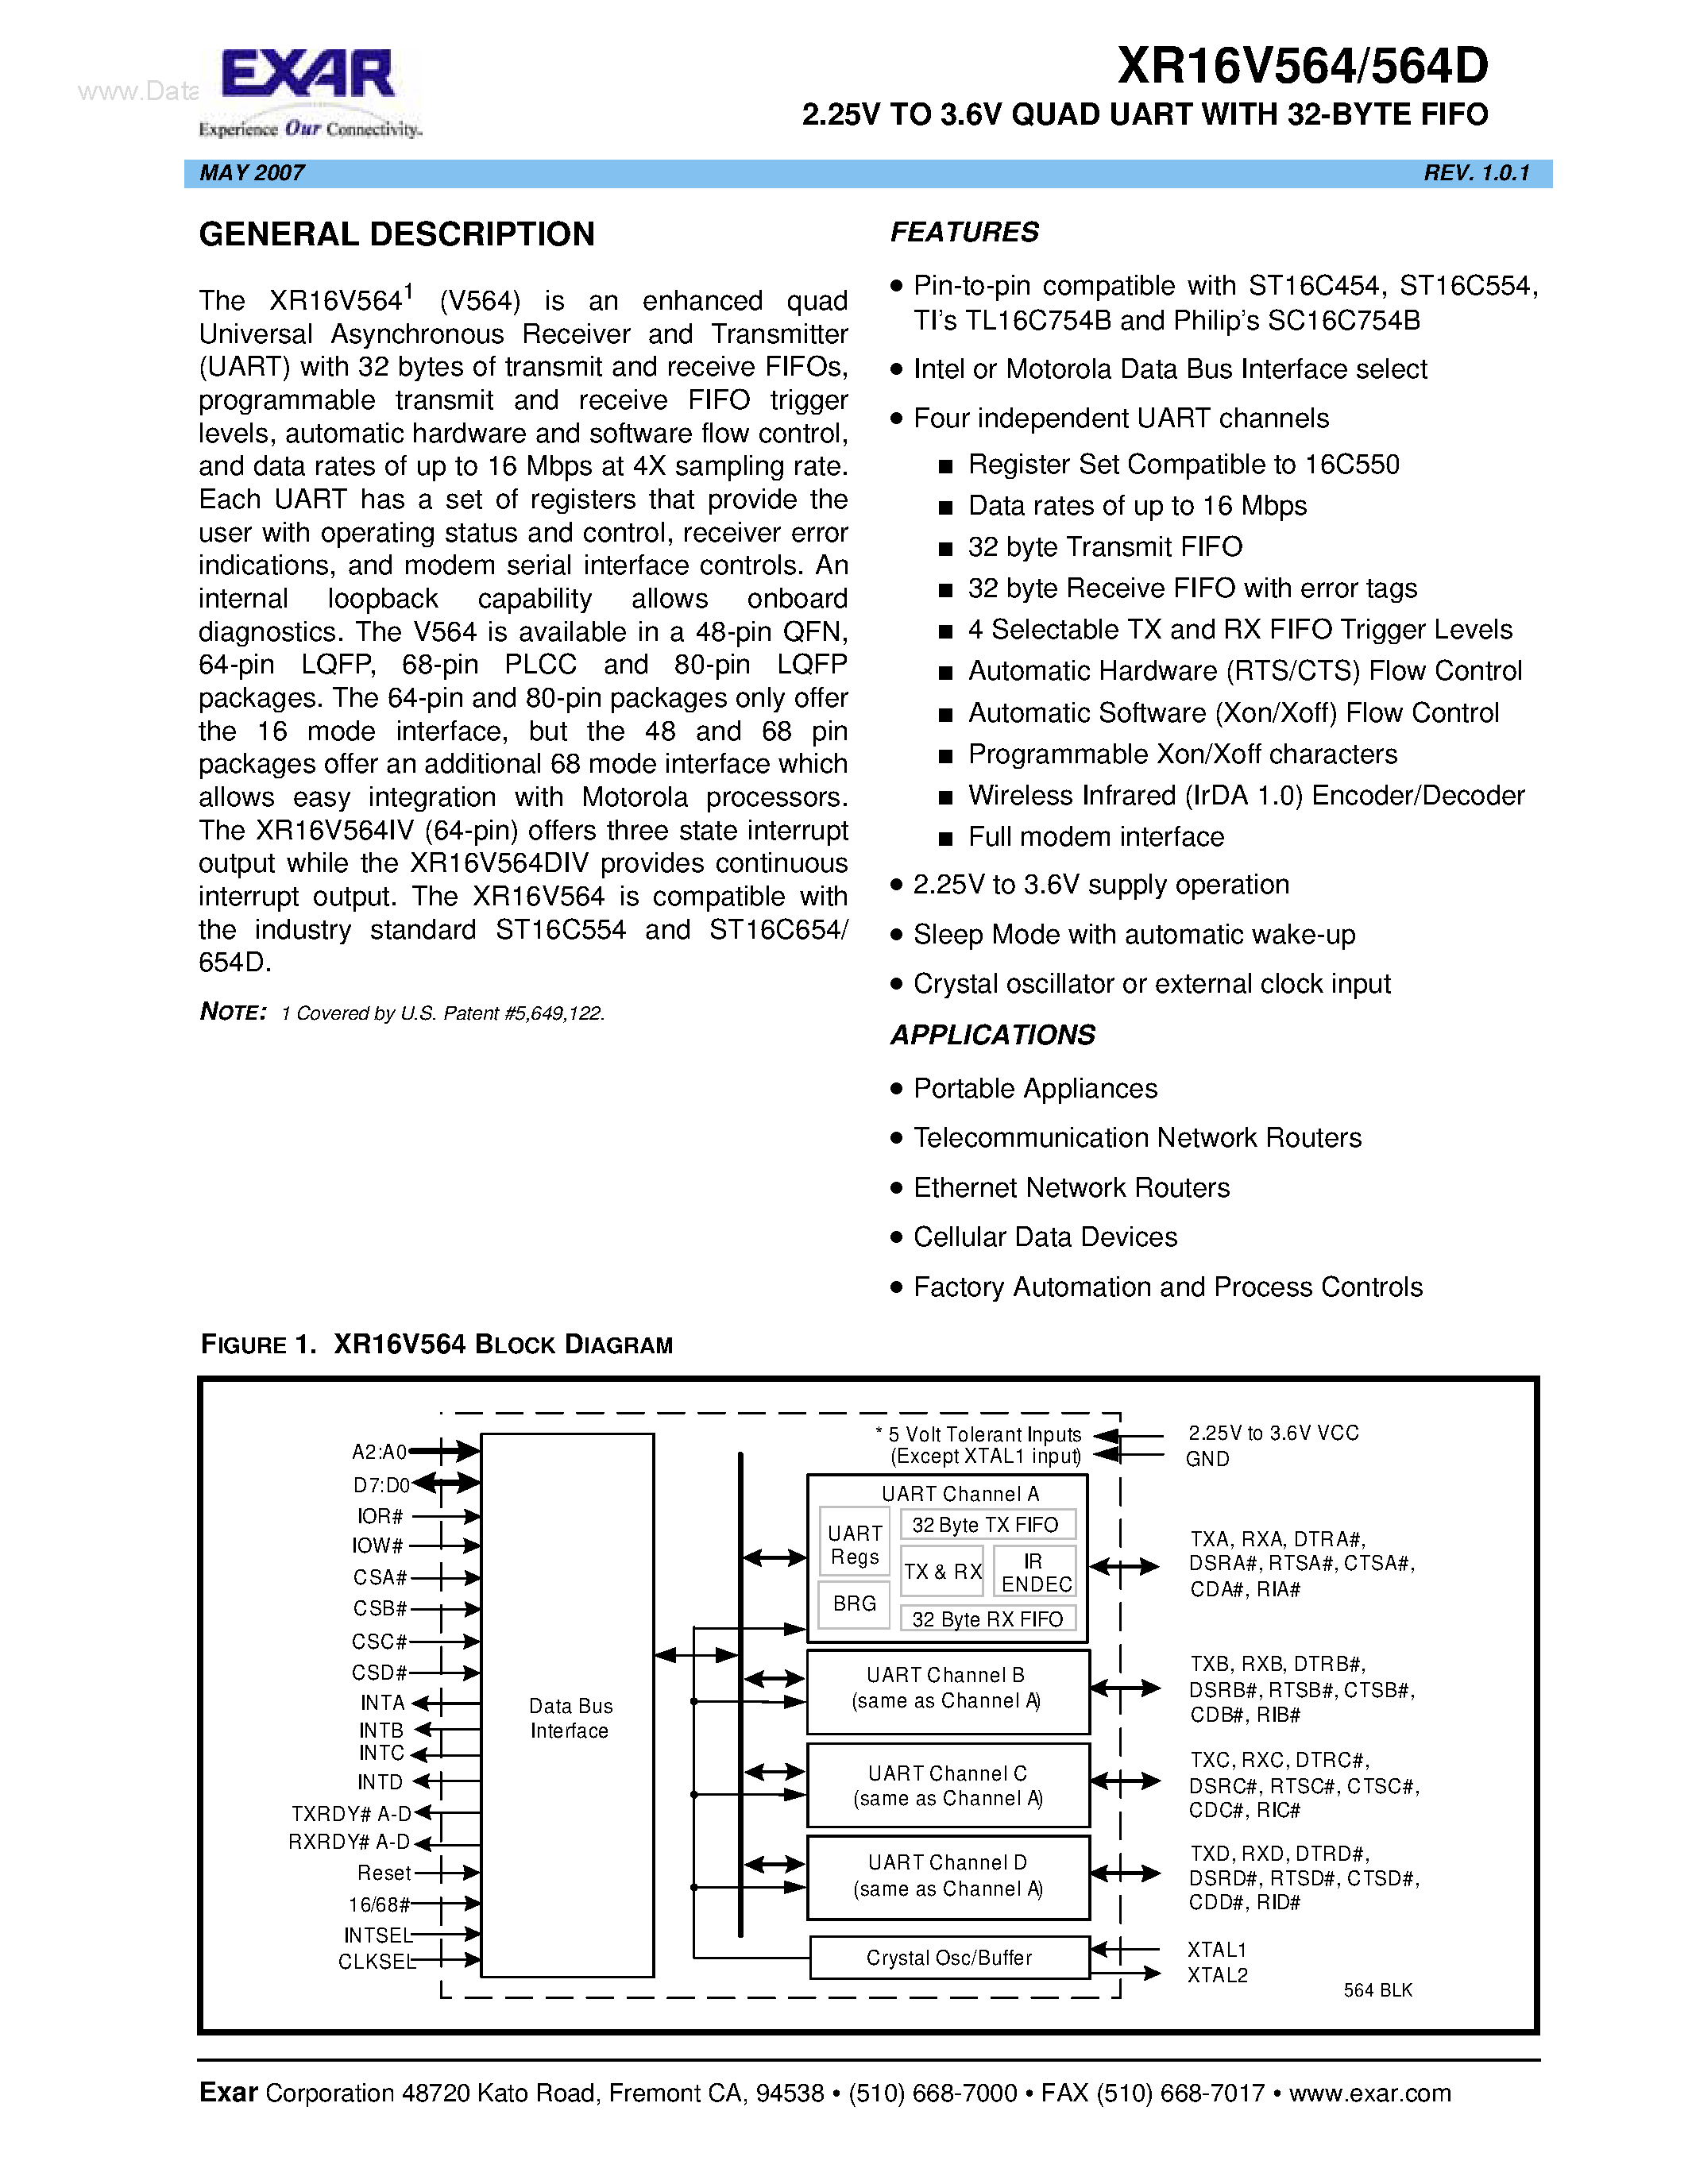 Datasheet XR16V564 - 2.25V TO 3.6V QUAD UART page 1